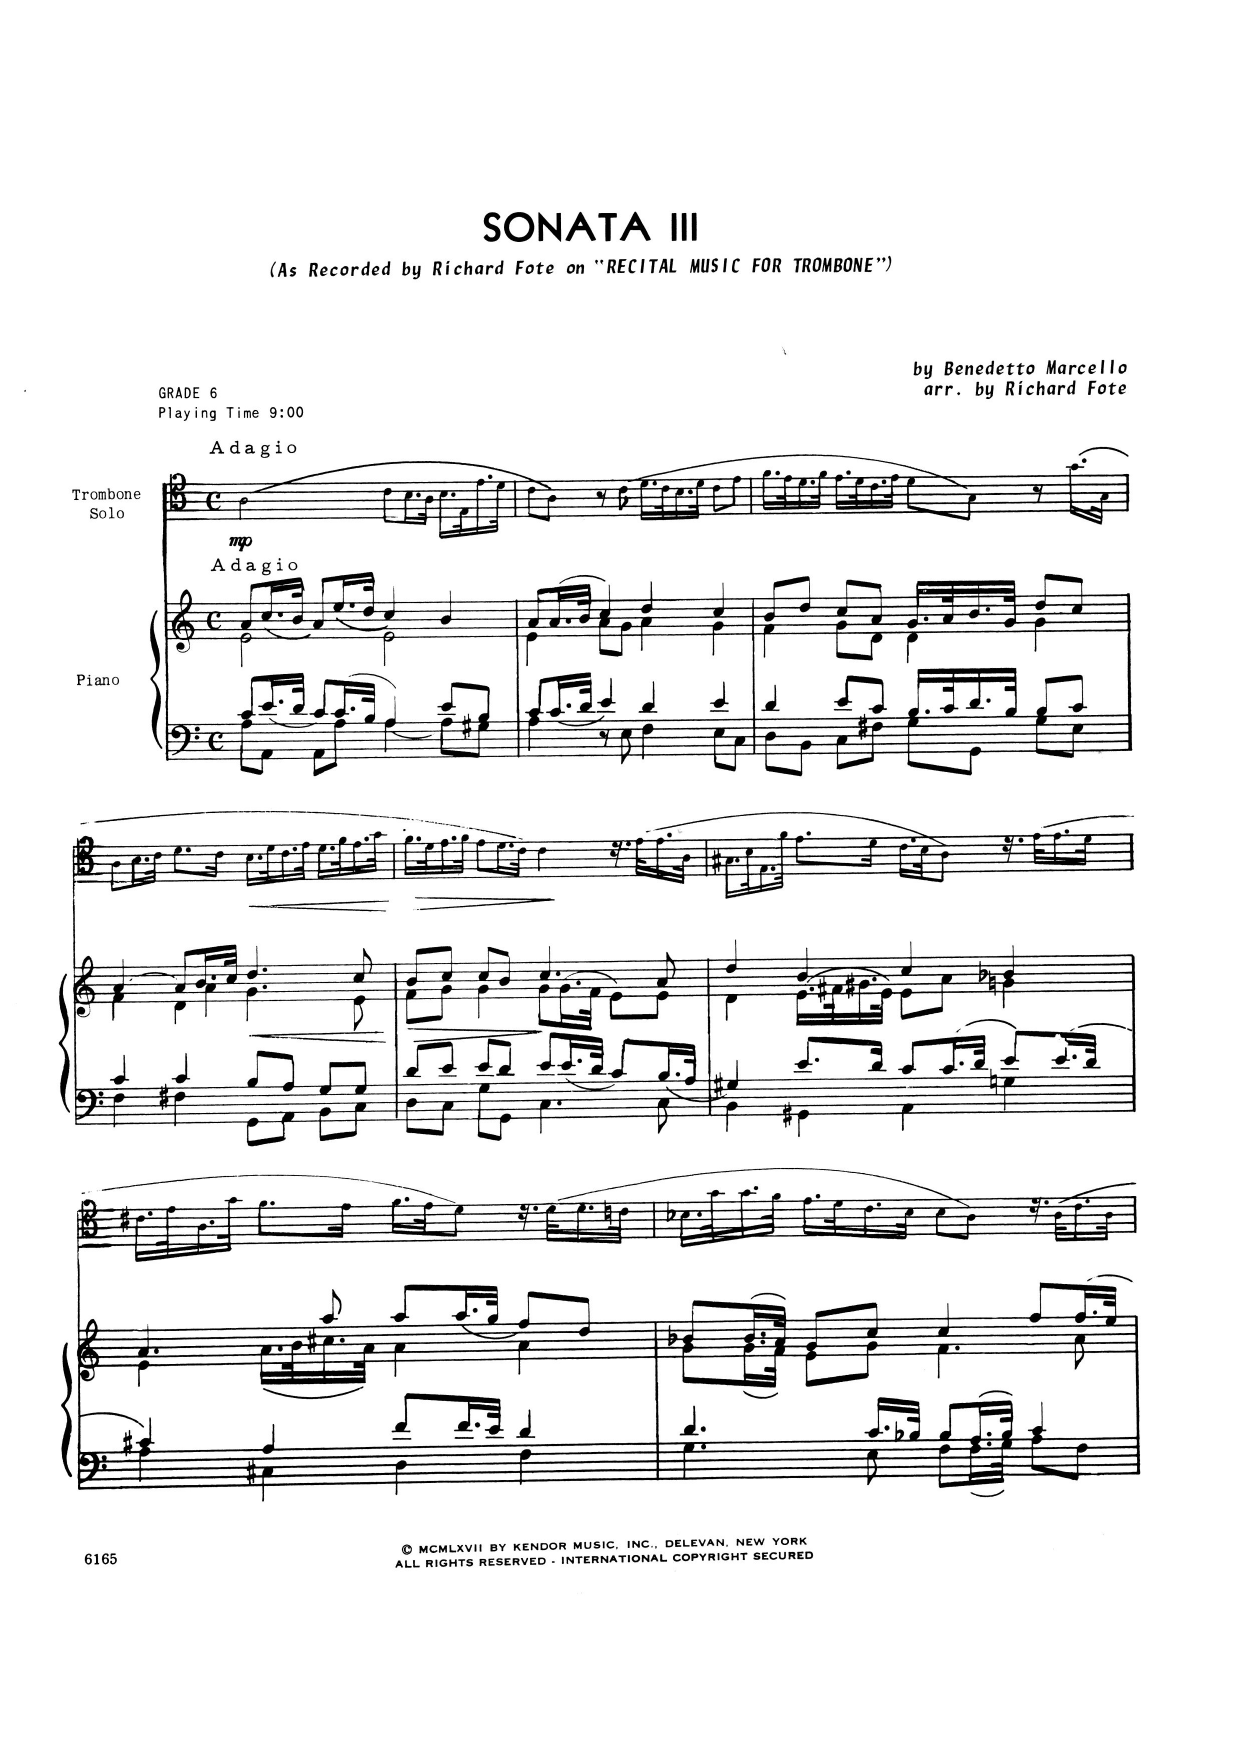 Download Richard Fote Sonata Iii - Piano Accompaniment Sheet Music